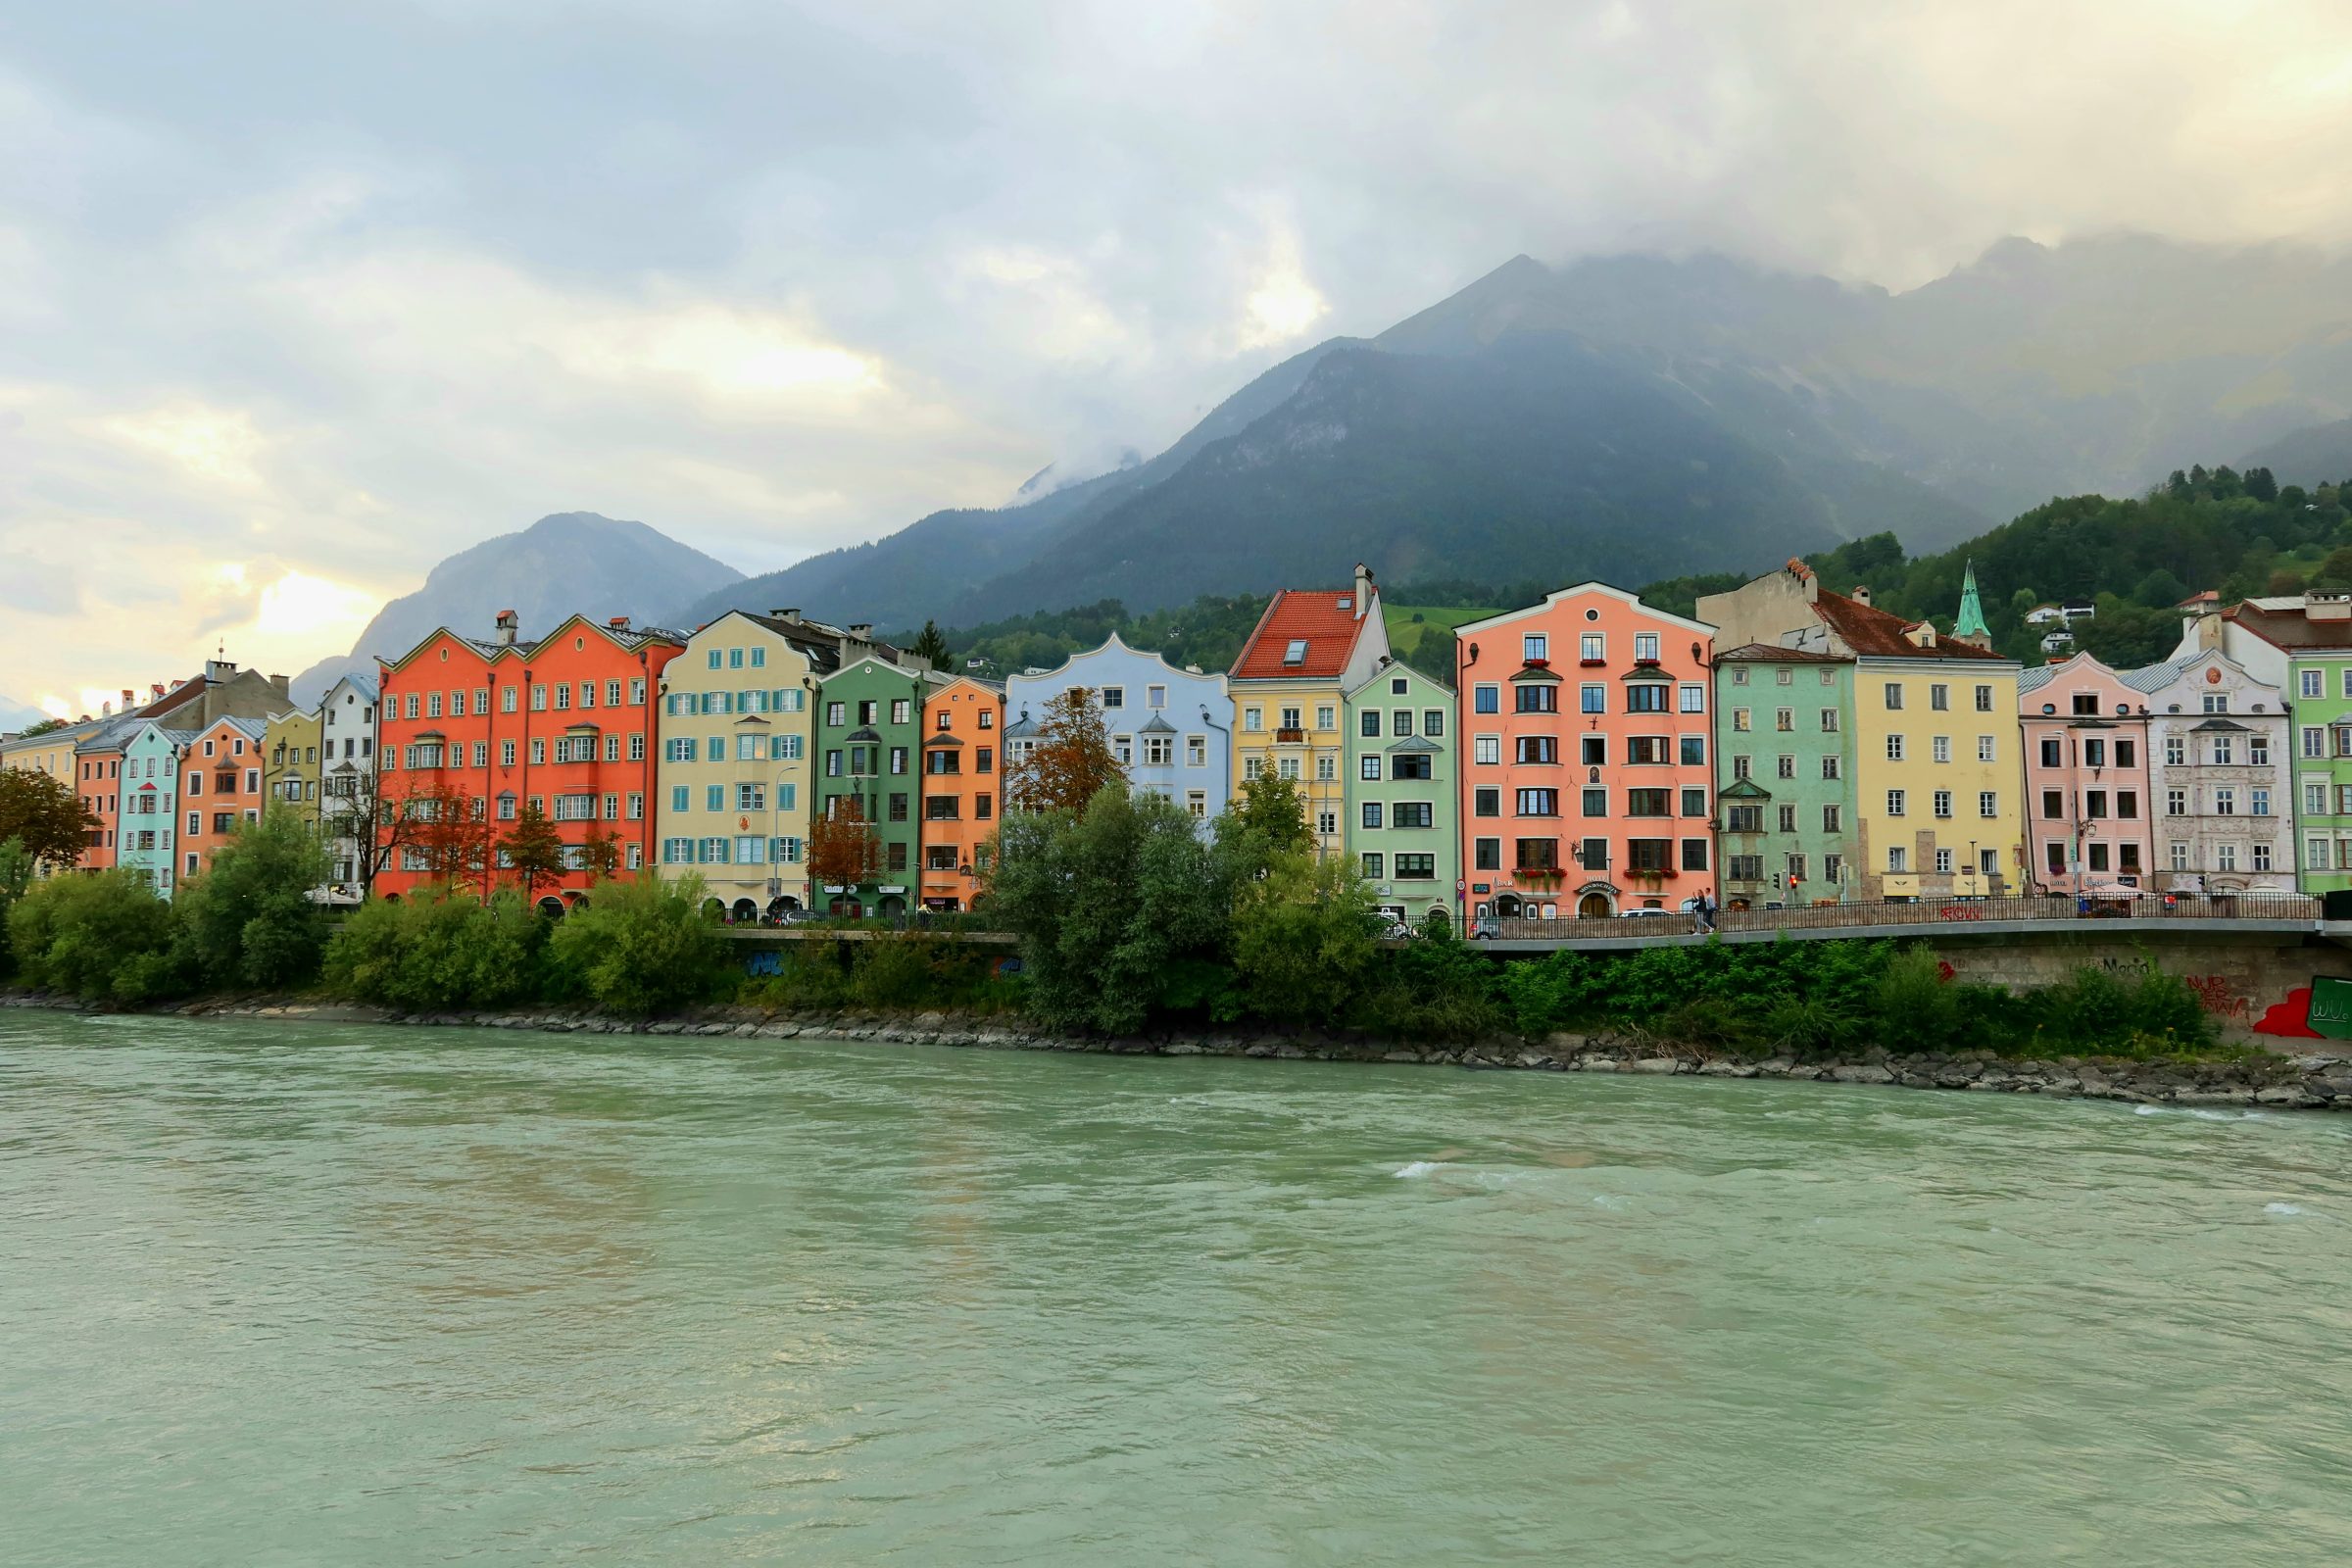 Le case colorate di Innsbruck